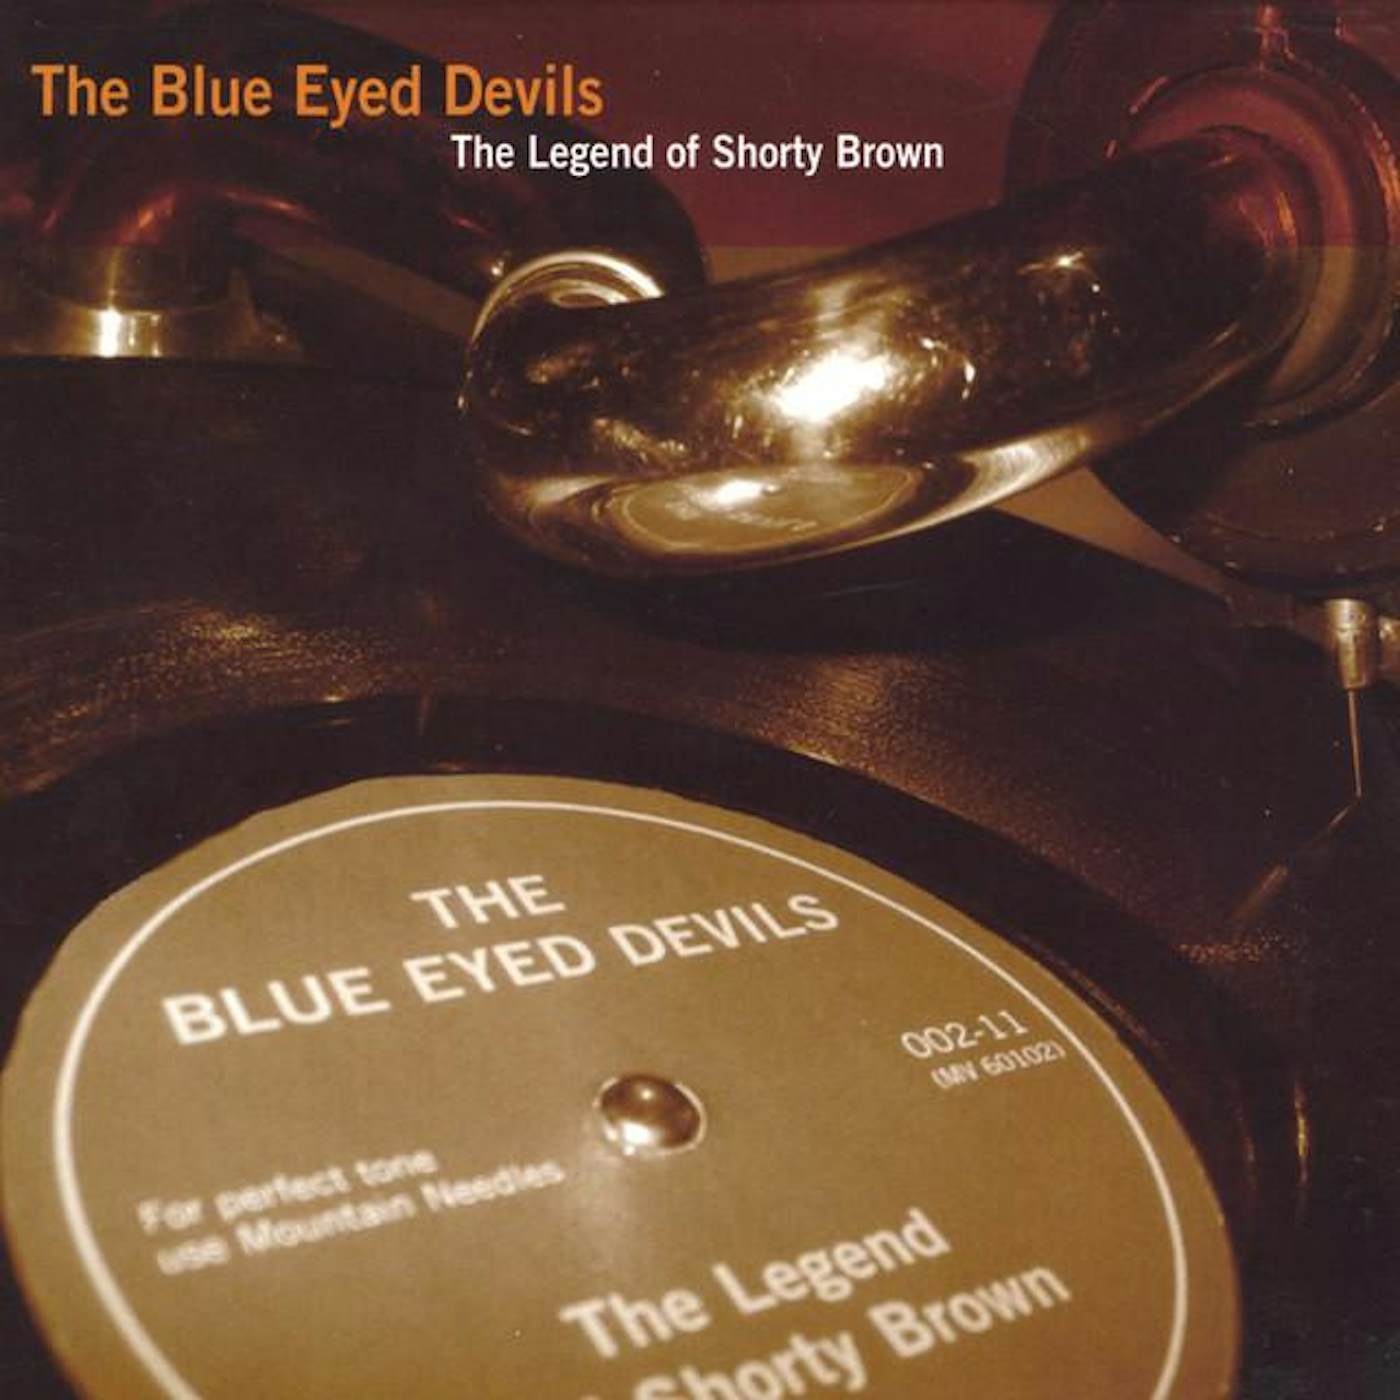 The Blue Eyed Devils